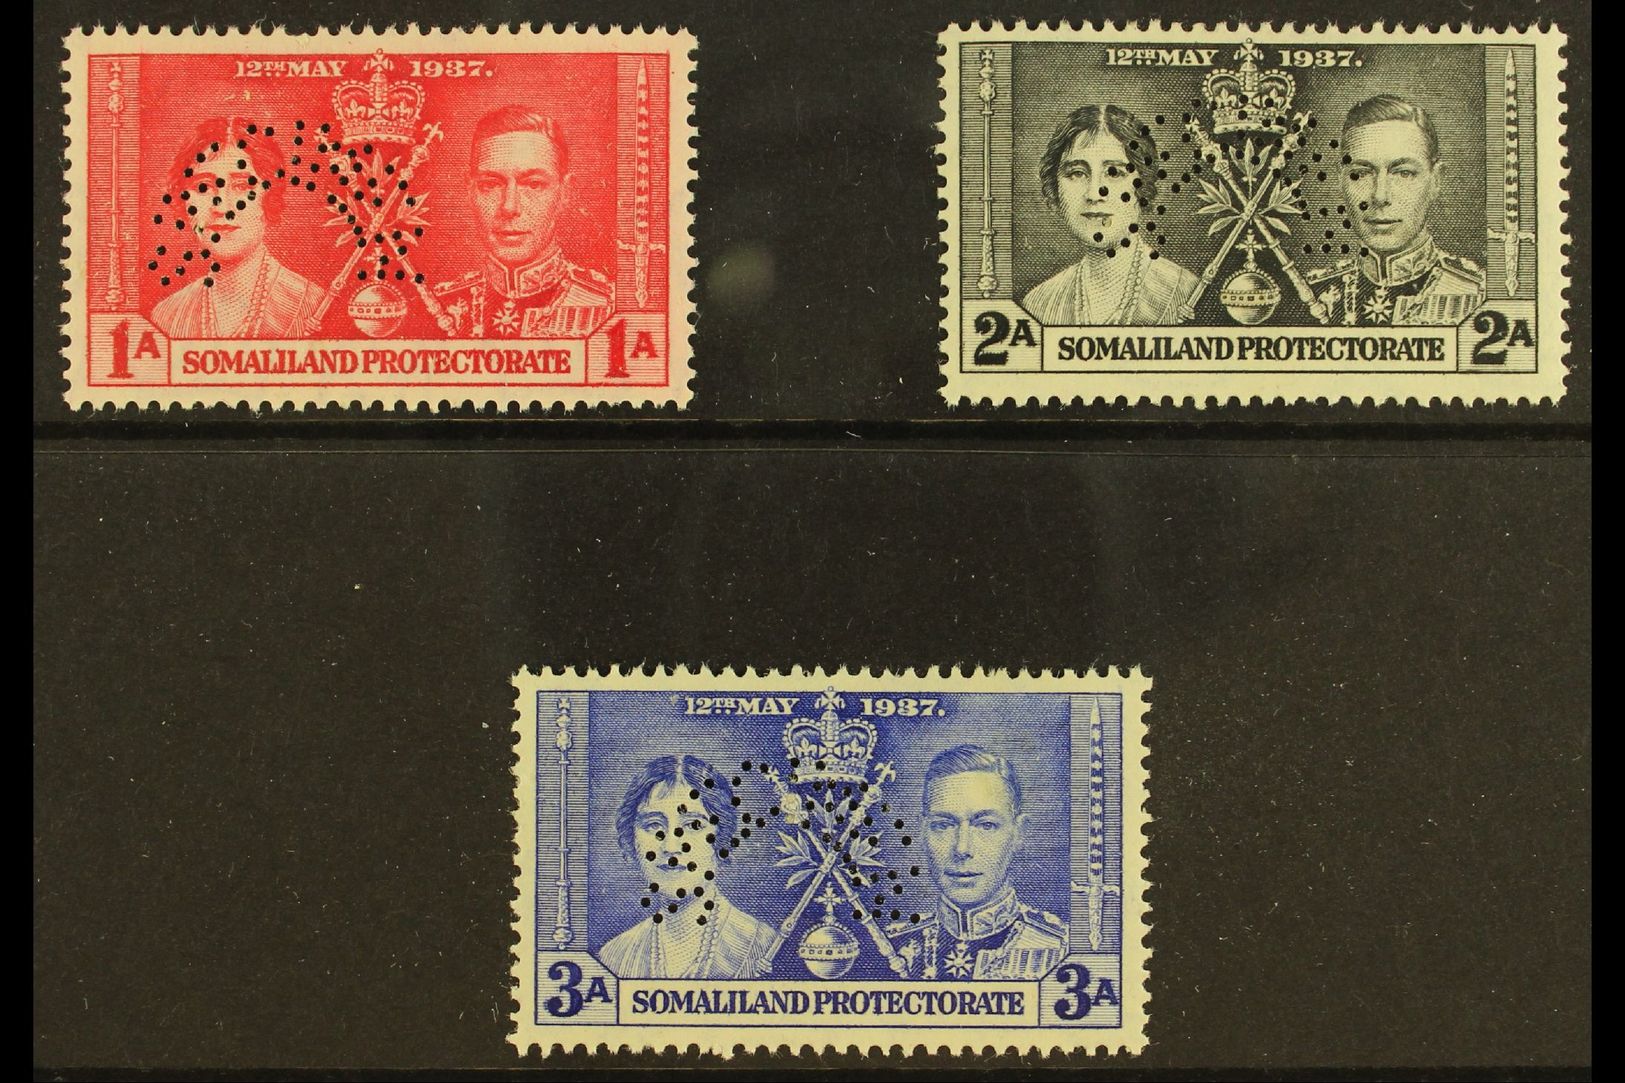 1937  Coronation Set Complete, Perforated "Specimen", SG 90s/92s. Very Fine Mint Part Og. (3 Stamps) For More Images, Pl - Somaliland (Protectorat ...-1959)